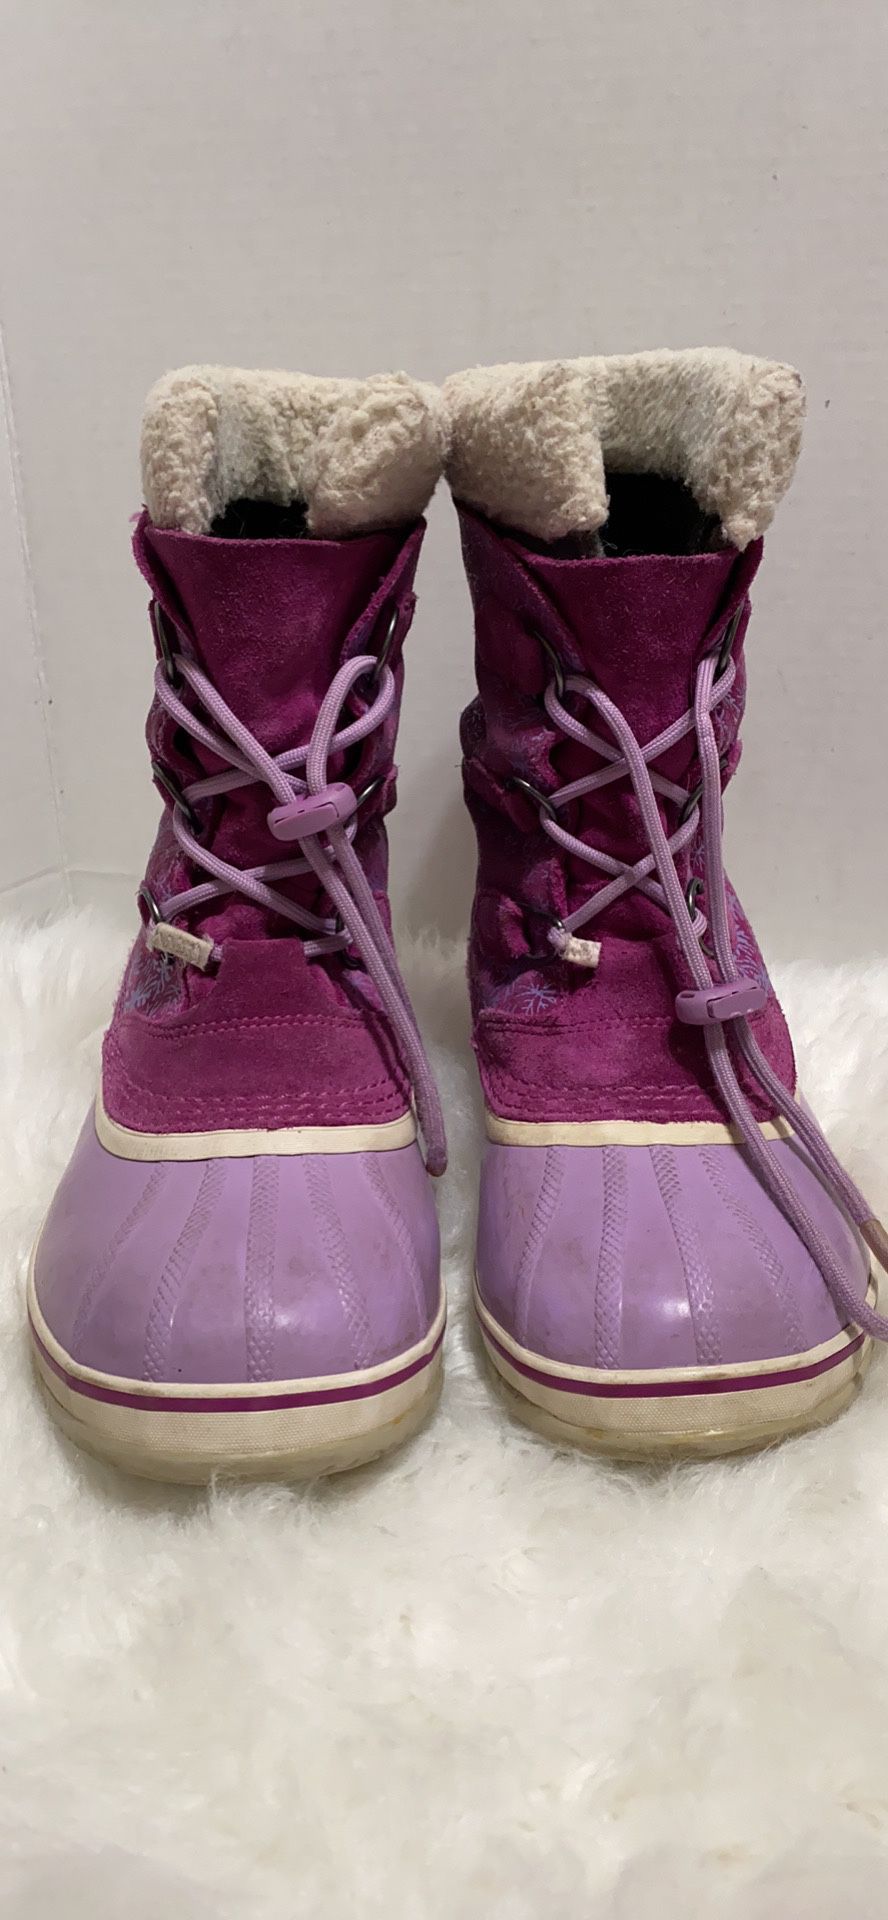 Sorel Pink Waterproof Warm Winter Snow Boots, Style NY1847-531, Women's Size 7